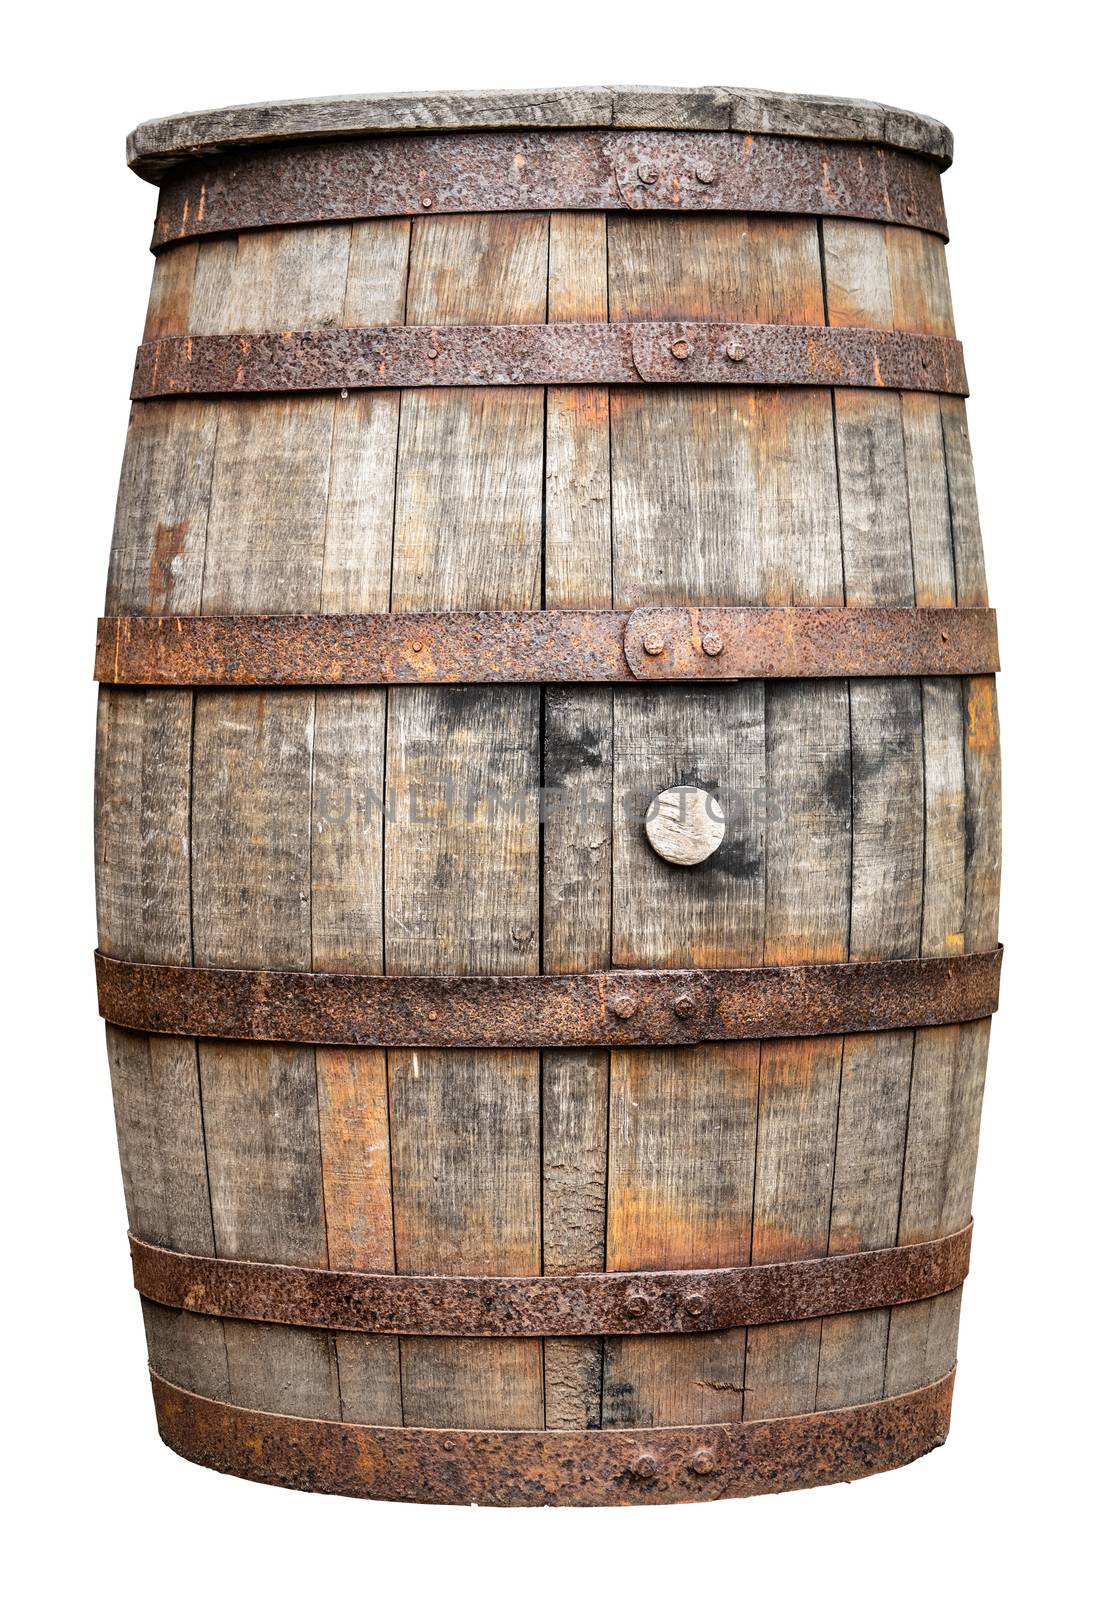 Vintage Wooden Beer Or Whiskey Barrel by mrdoomits